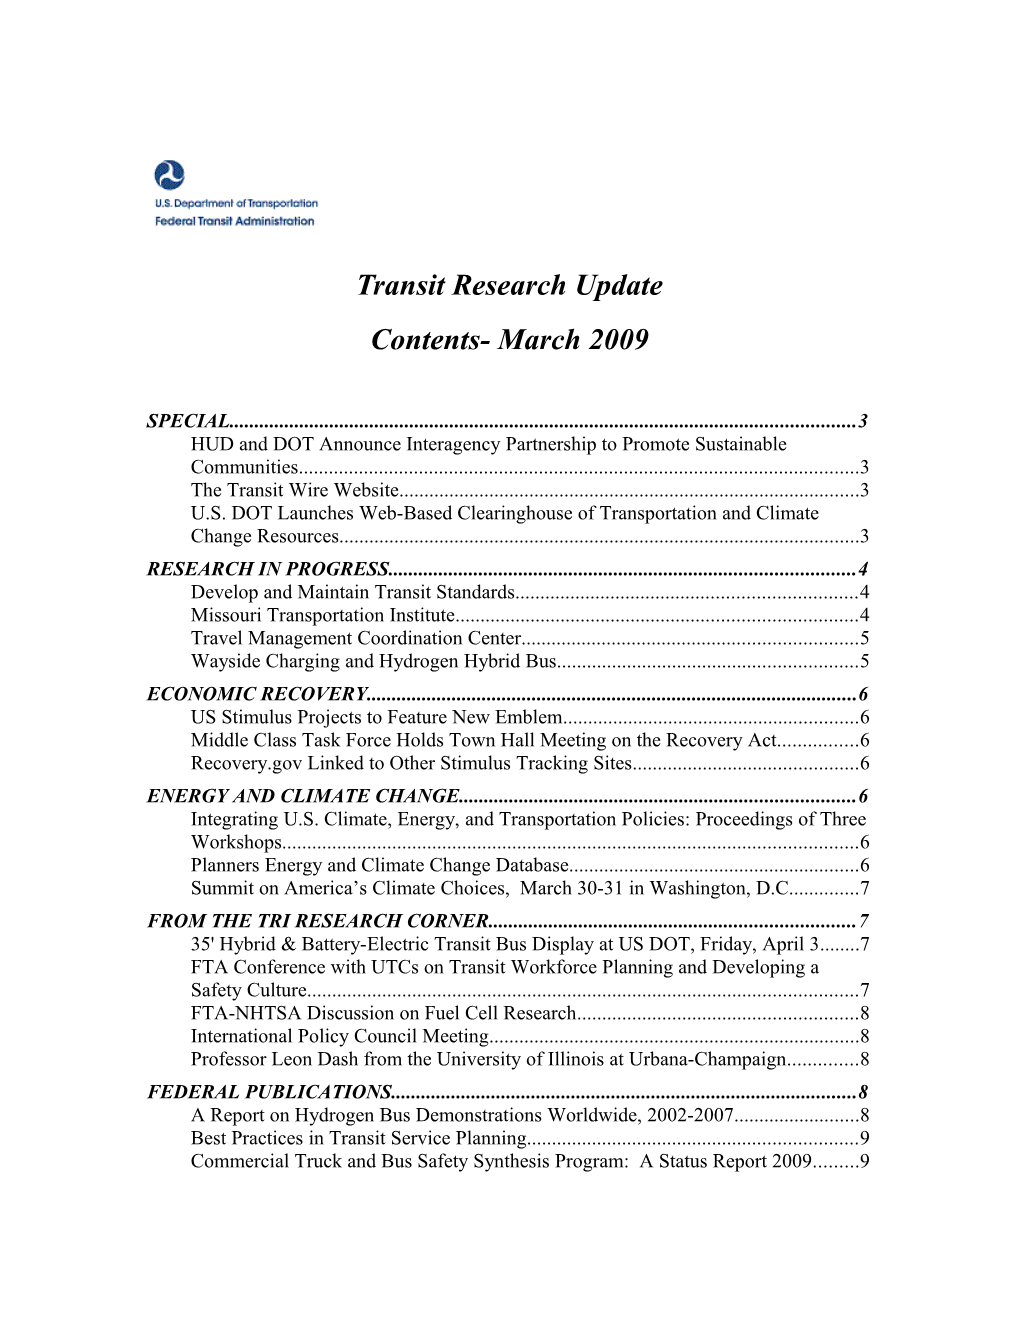 Transit Research Update, March 2009